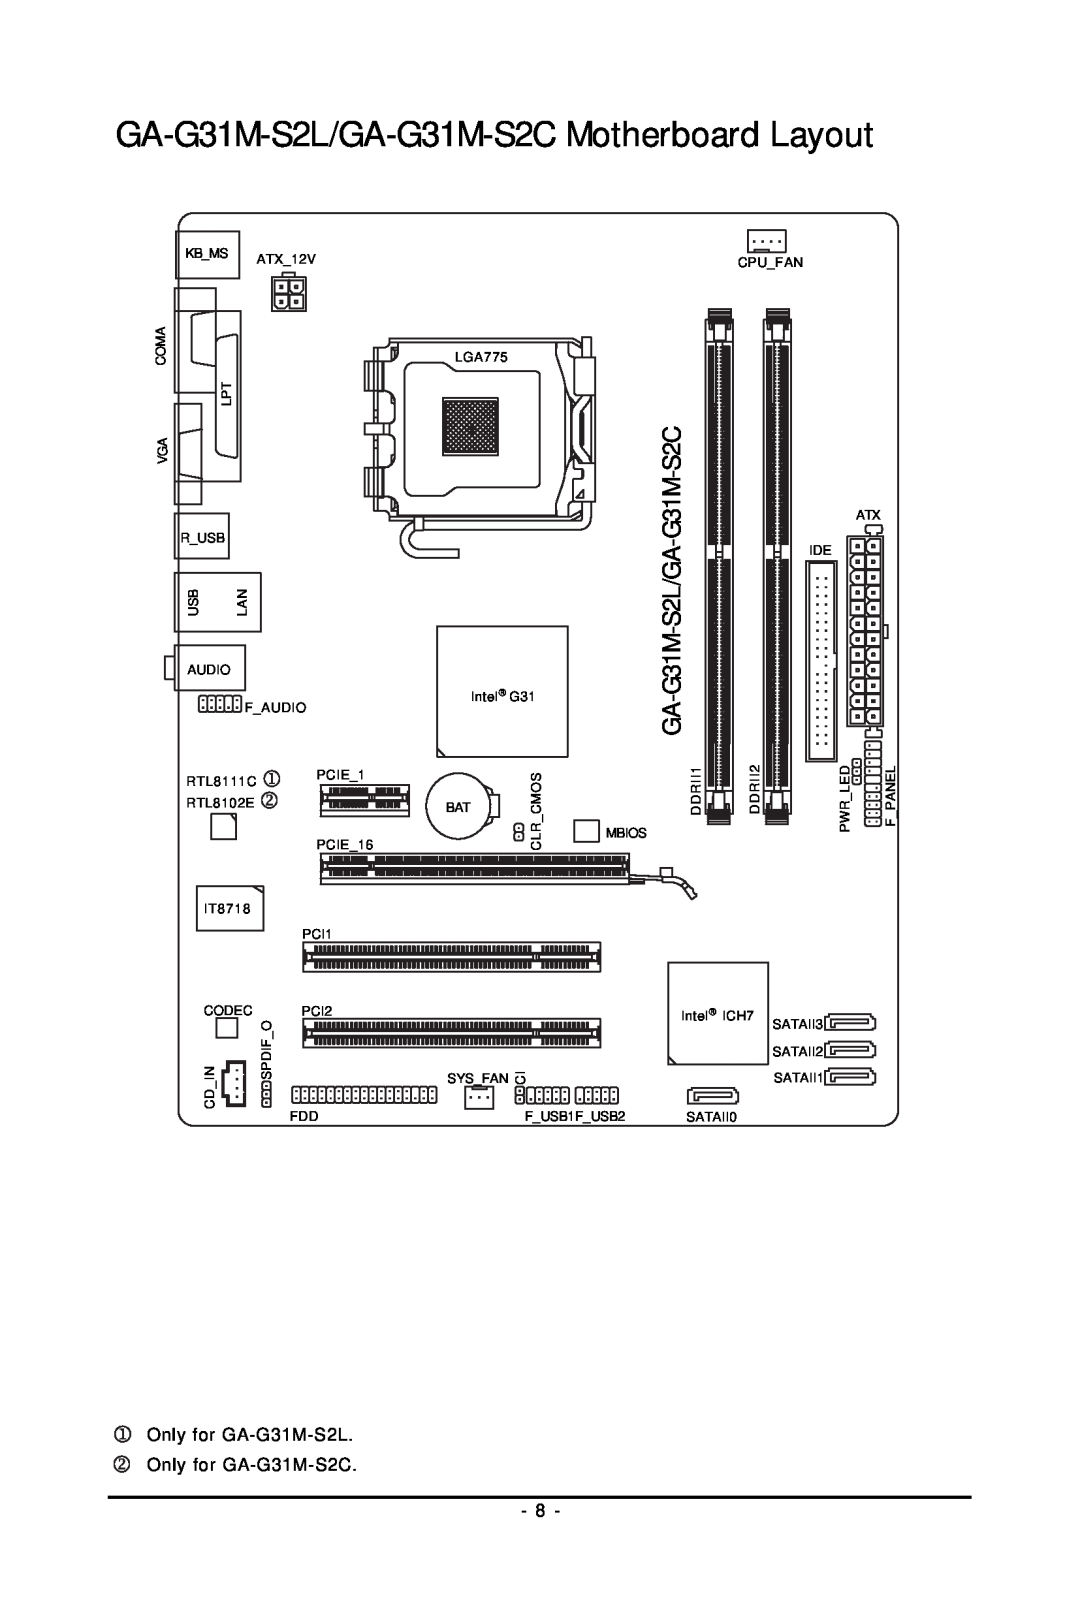 Intel user manual GA-G31M-S2L/GA-G31M-S2CMotherboard Layout 